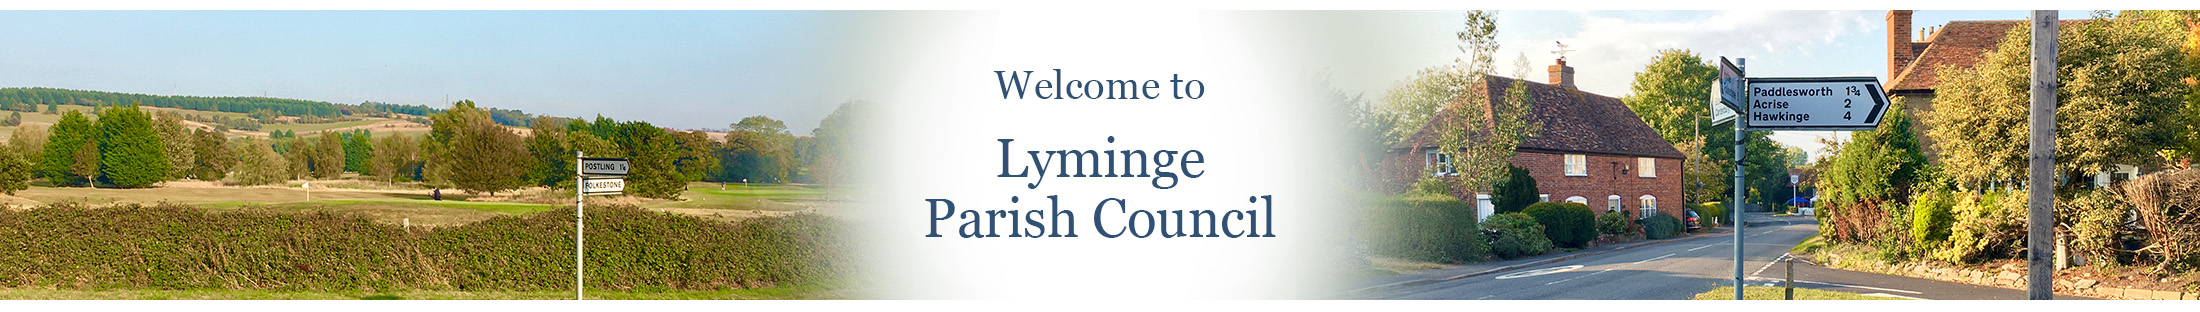 Header Image for Lyminge Parish Council